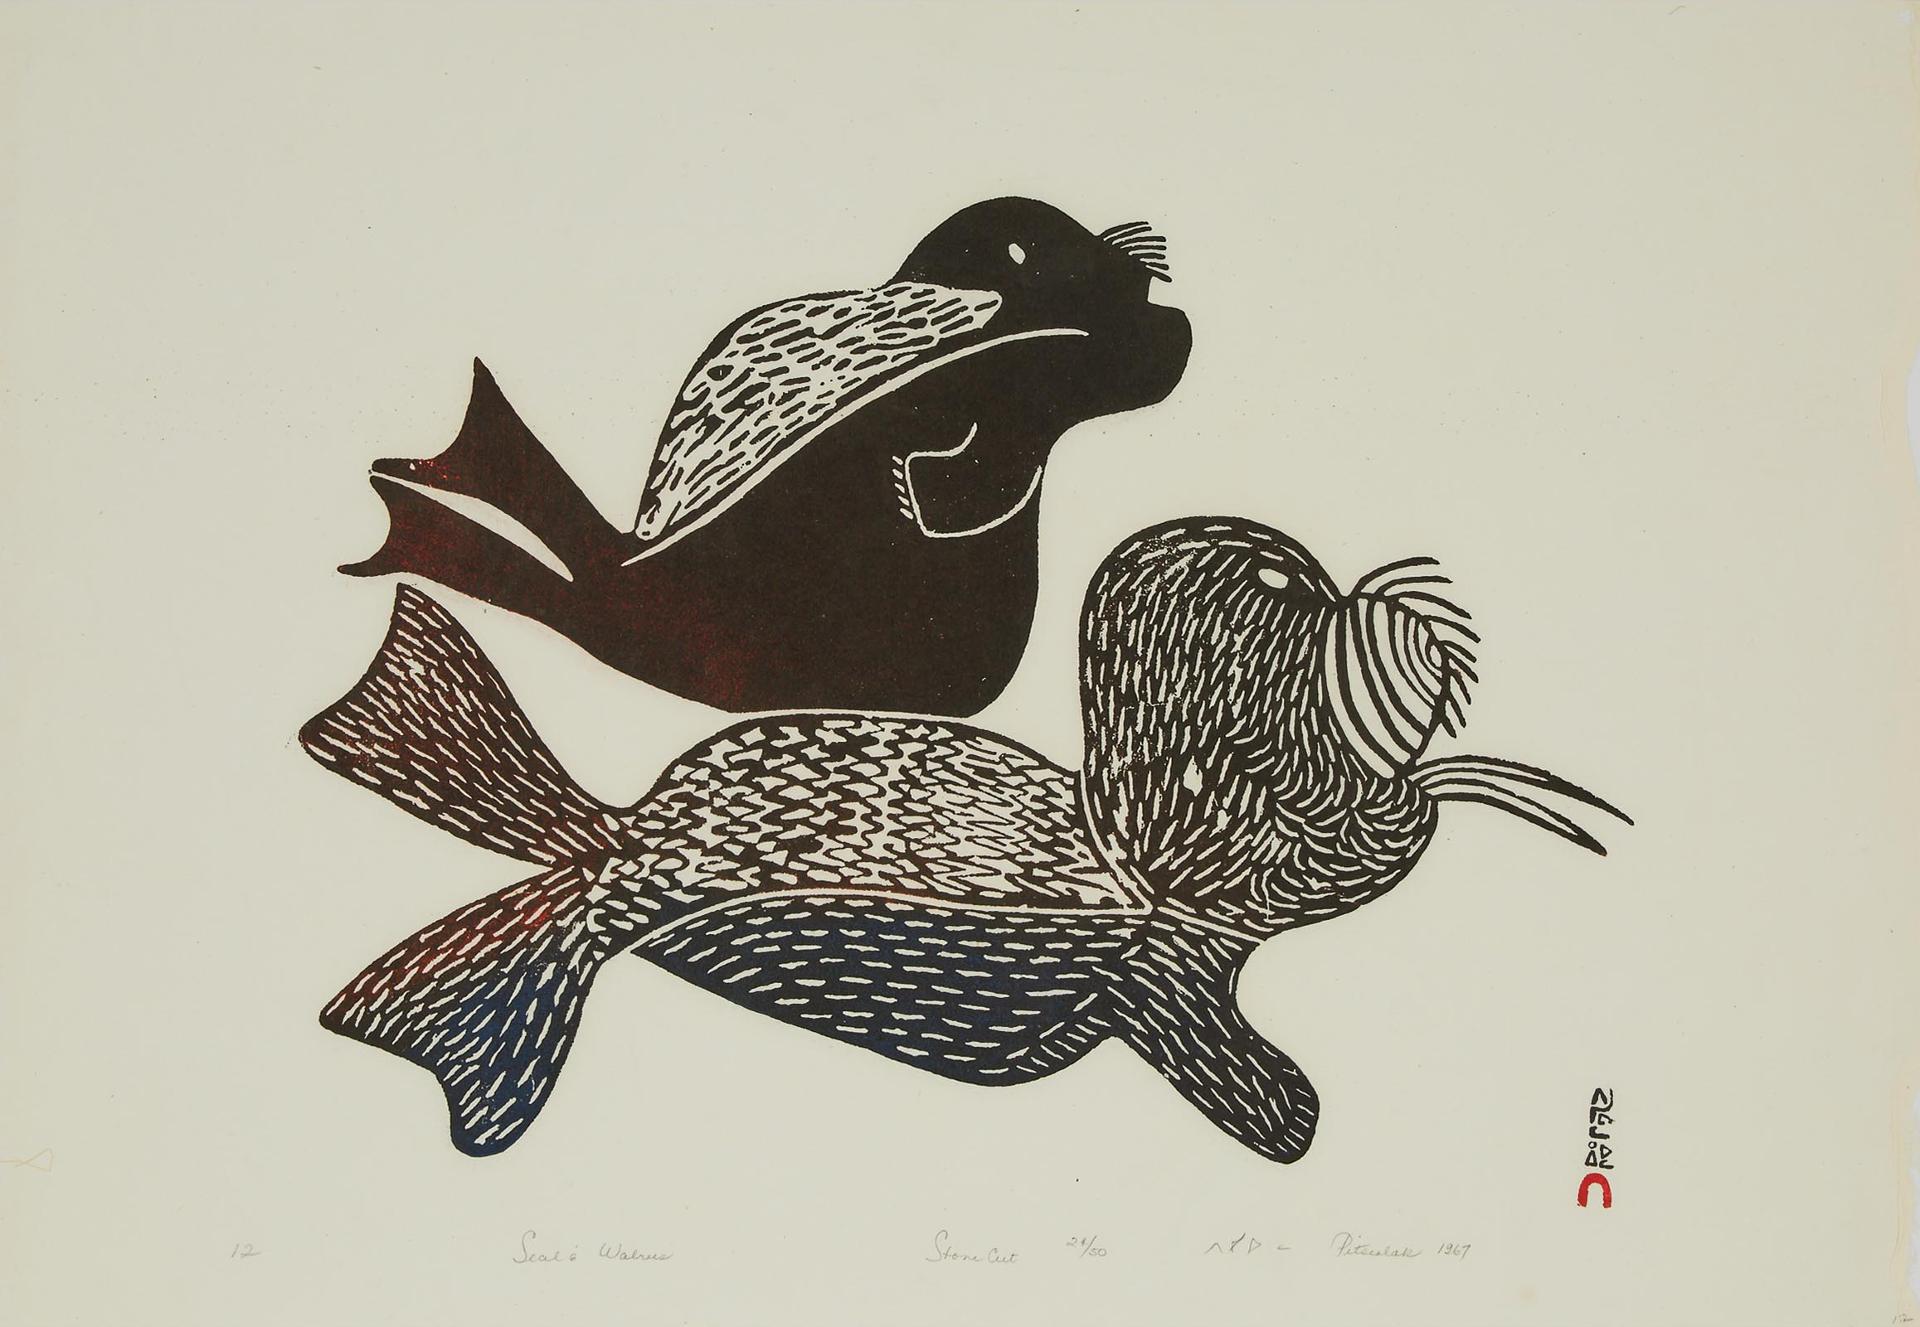 Pitseolak Ashoona (1904-1983) - Seal And Walrus